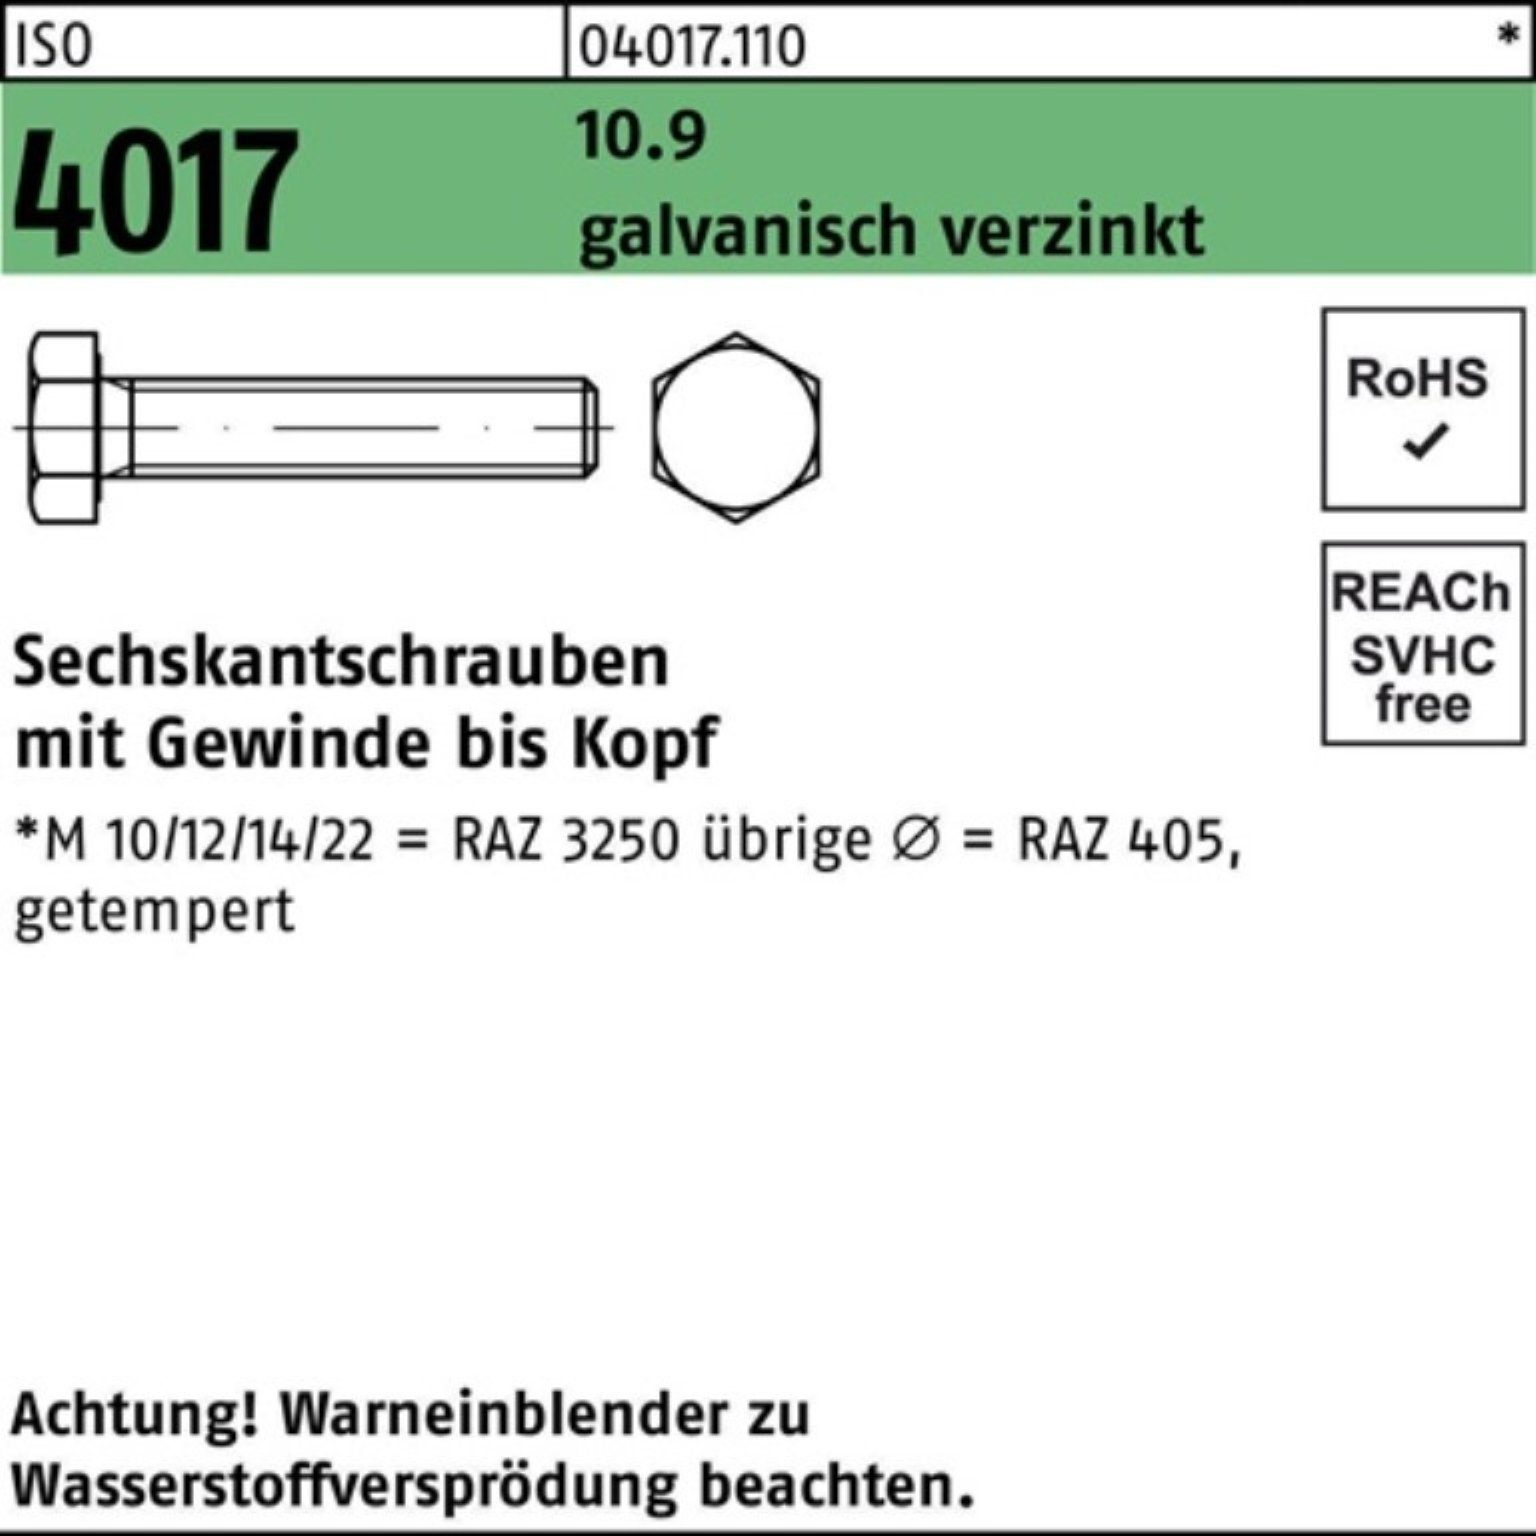 Bufab ISO Sechskantschraube VG St 1 10.9 100er Sechskantschraube galv.verz. 100 4017 Pack M30x